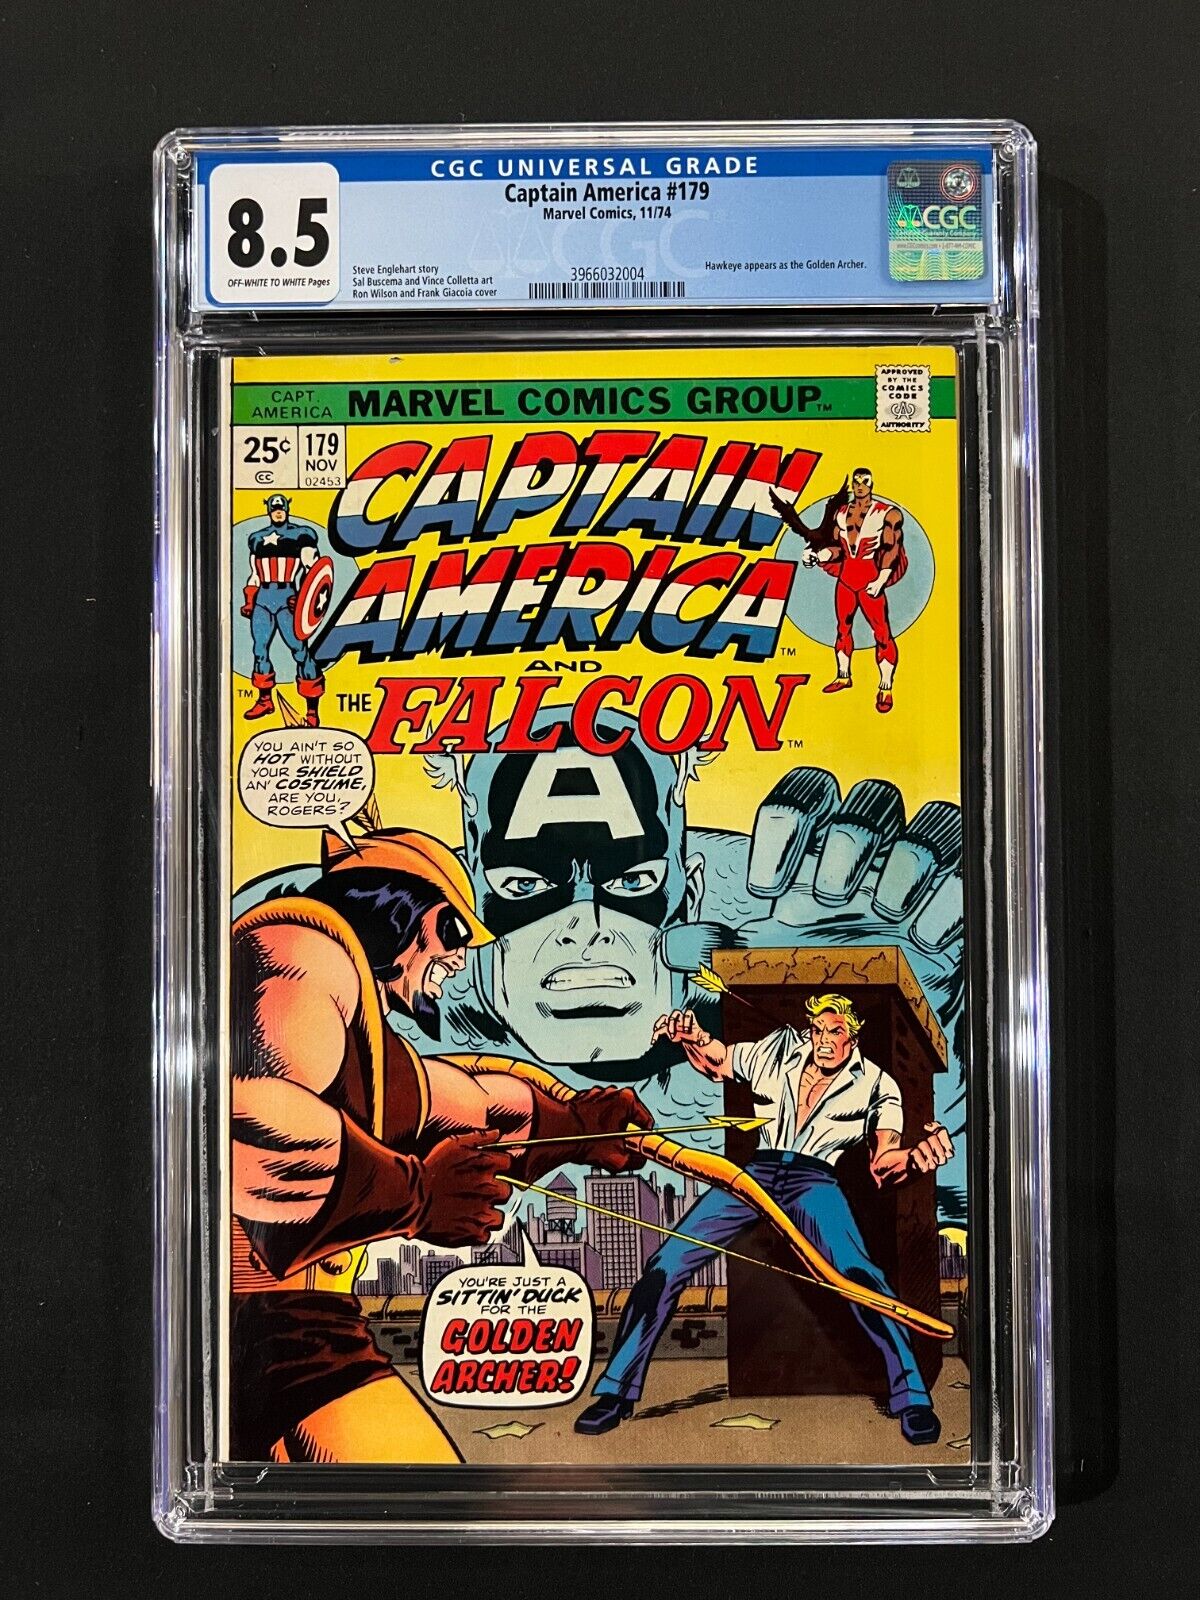 Captain America #179 CGC 8.5 (1974) - Falcon - Hawkeye as Golden Archer